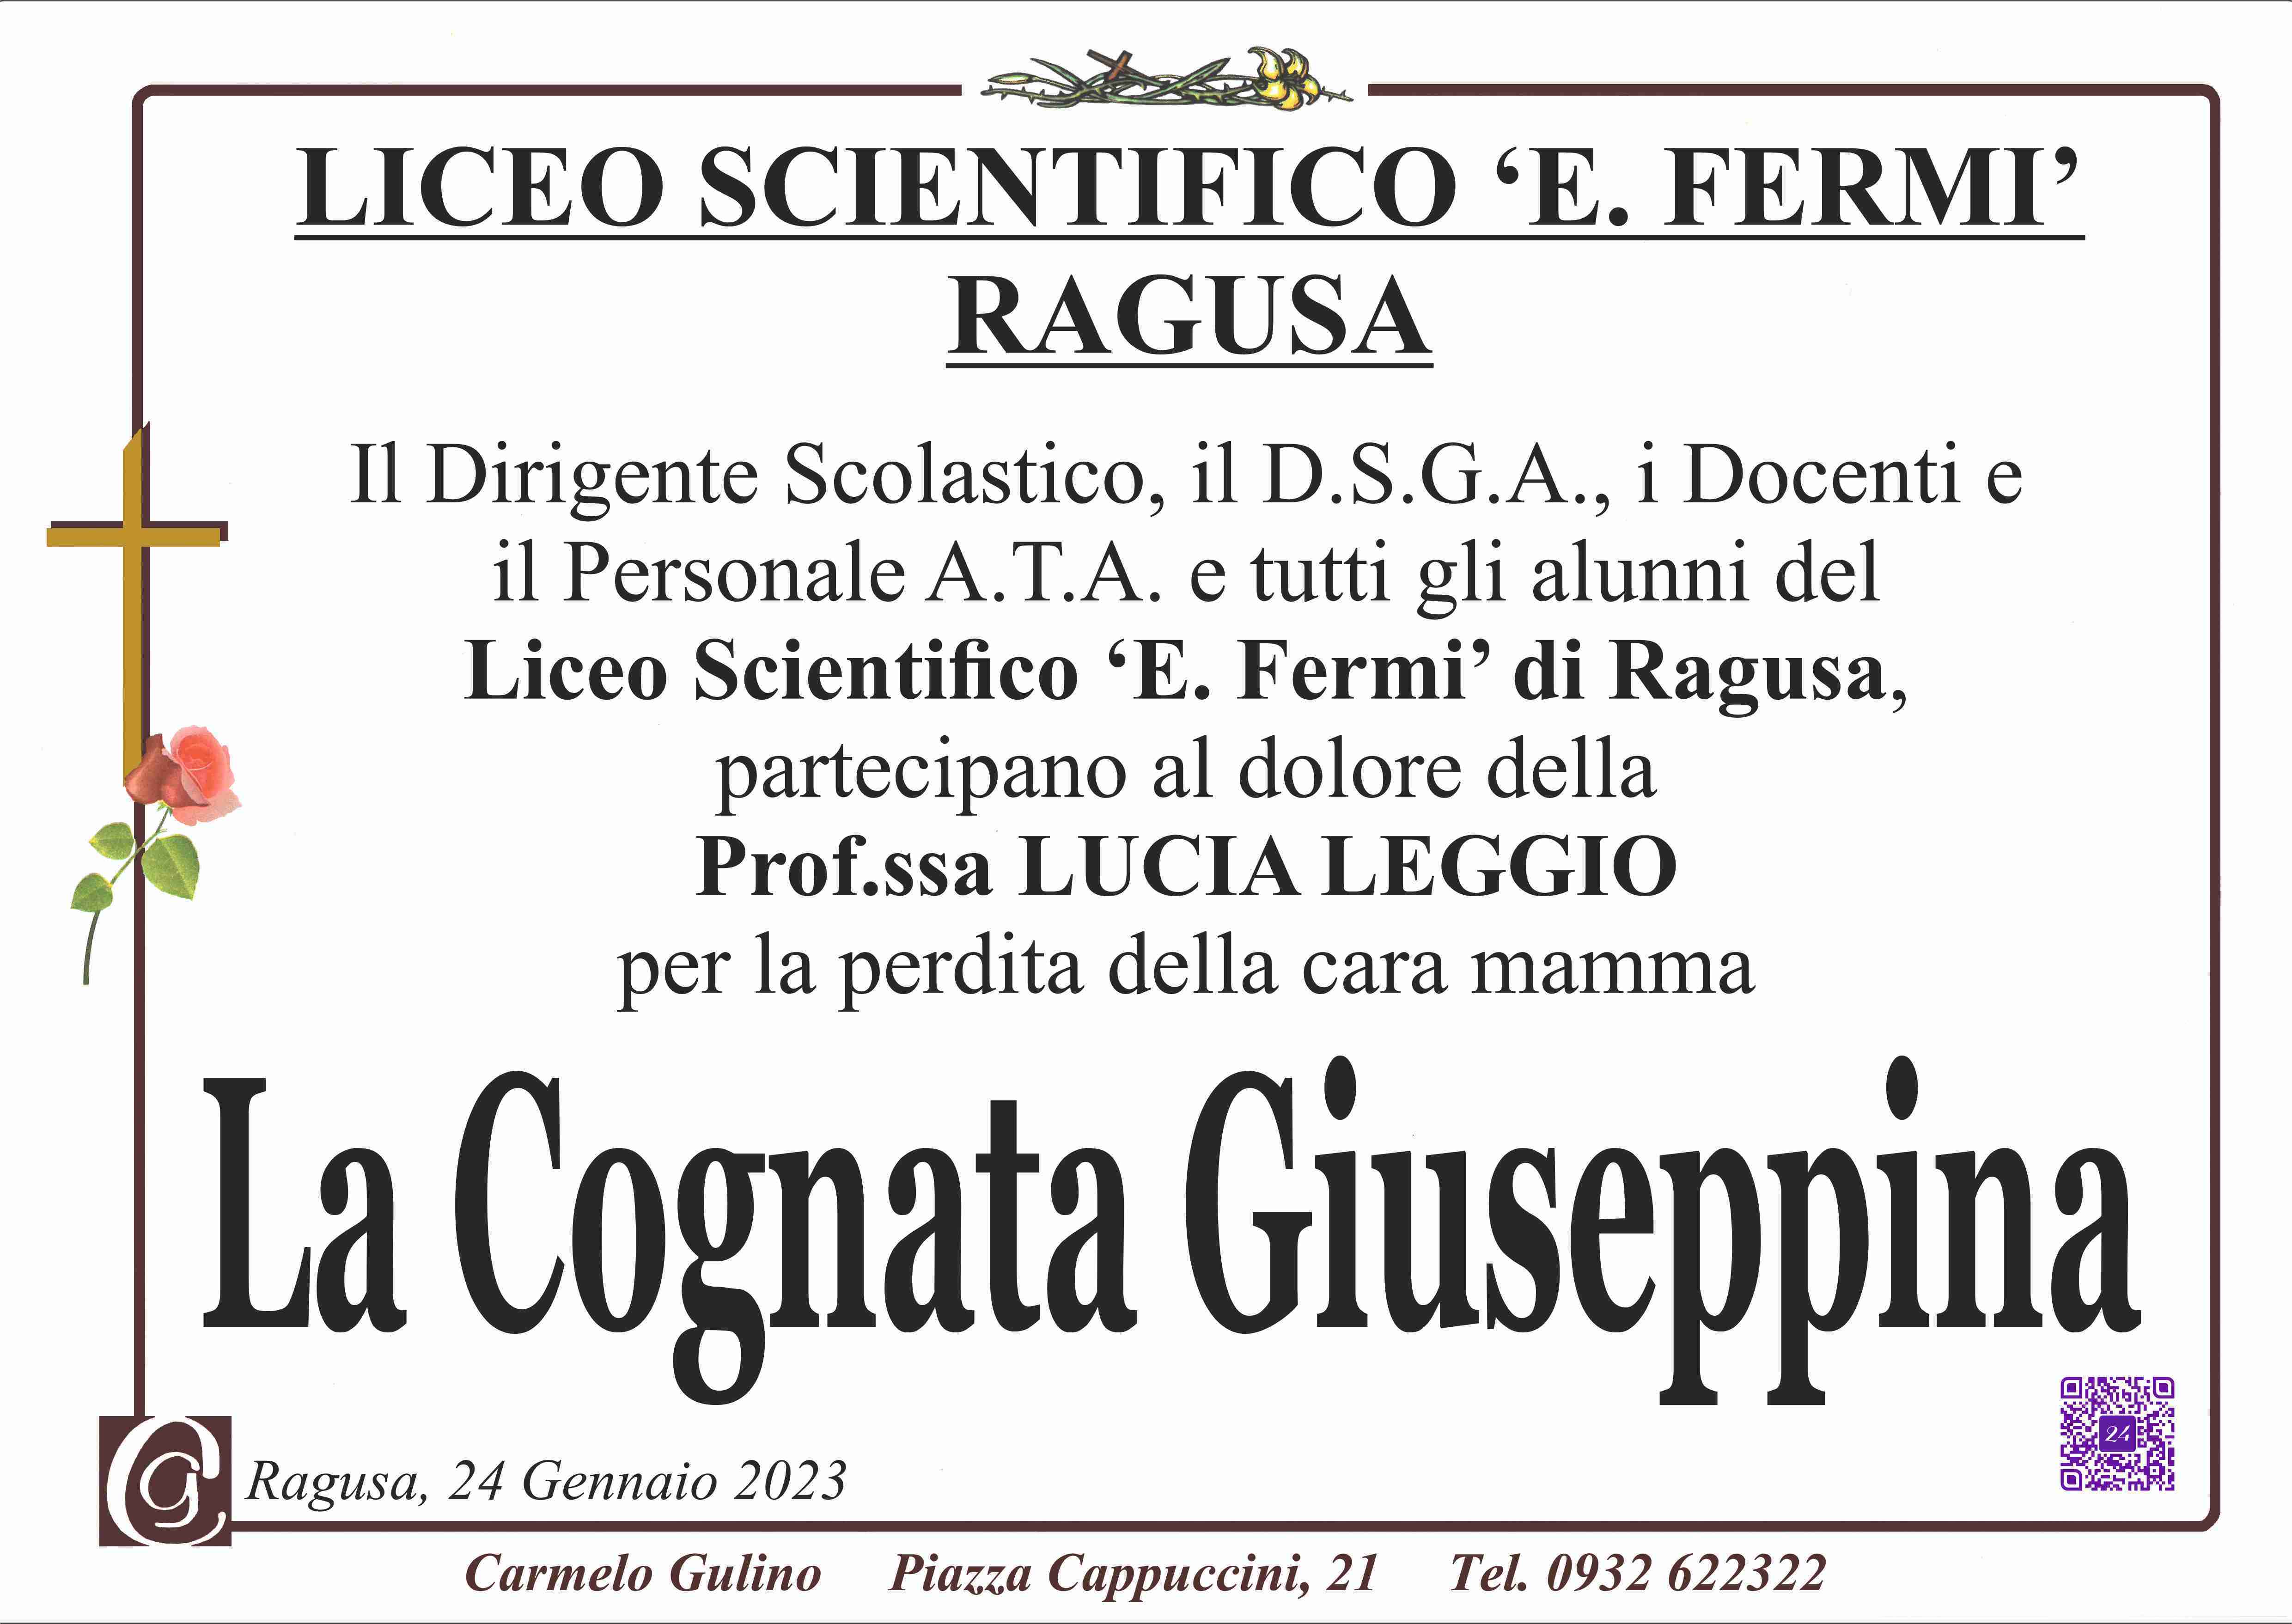 Giuseppina La Cognata